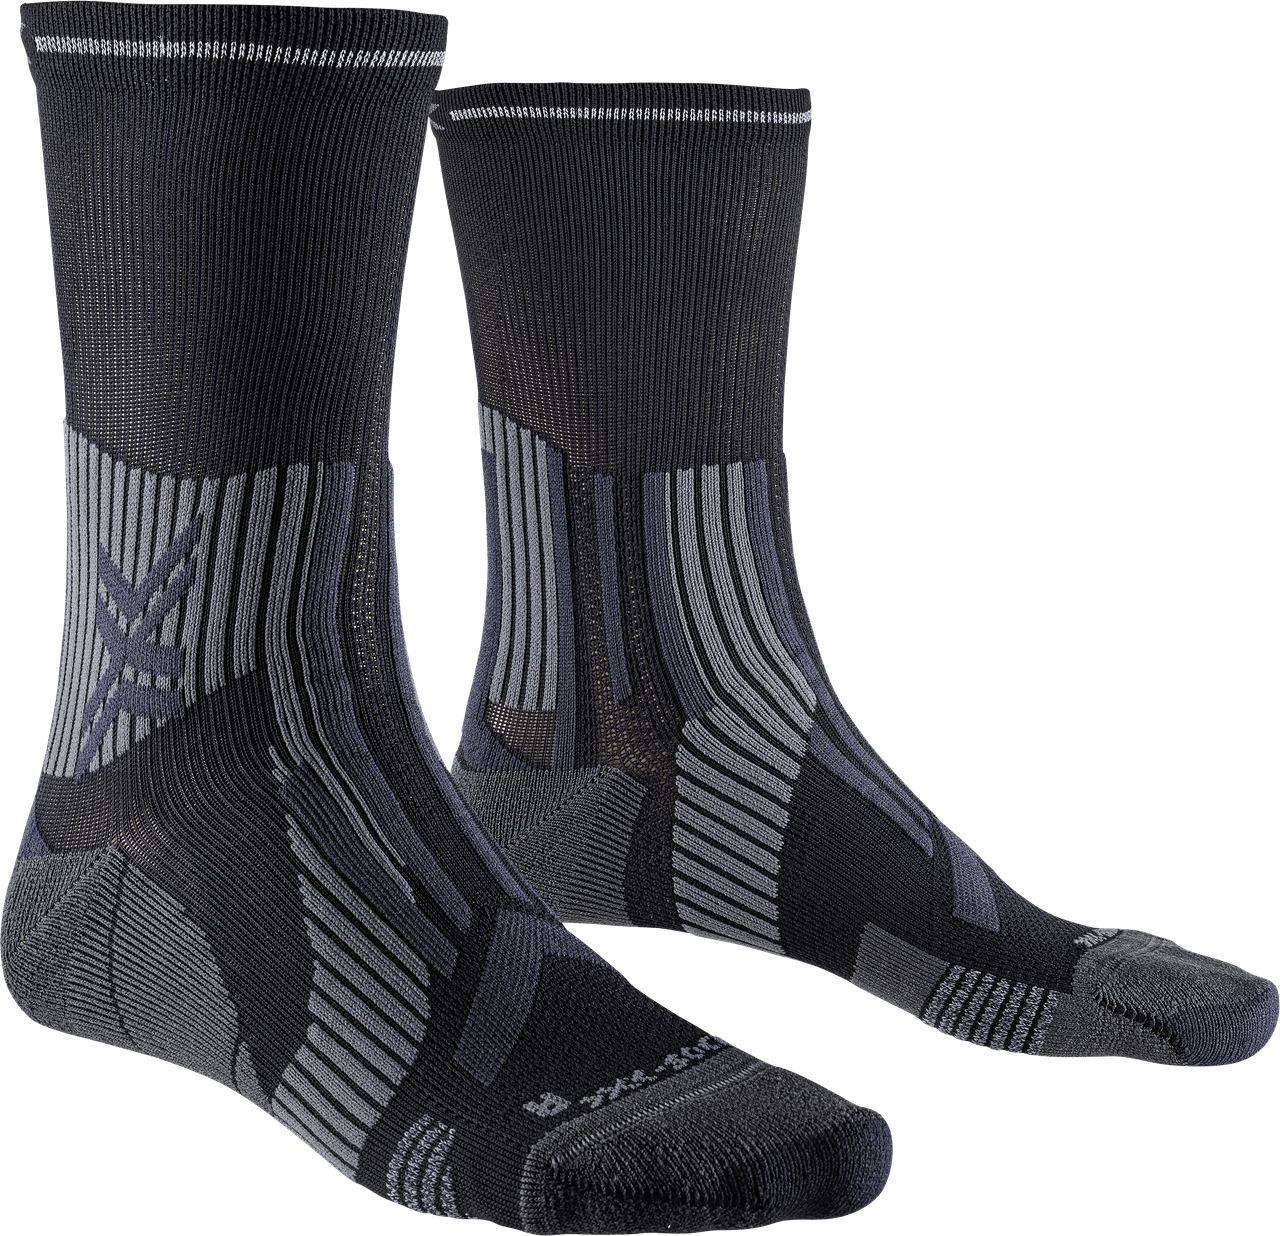 TOETOE® Cycling Socks